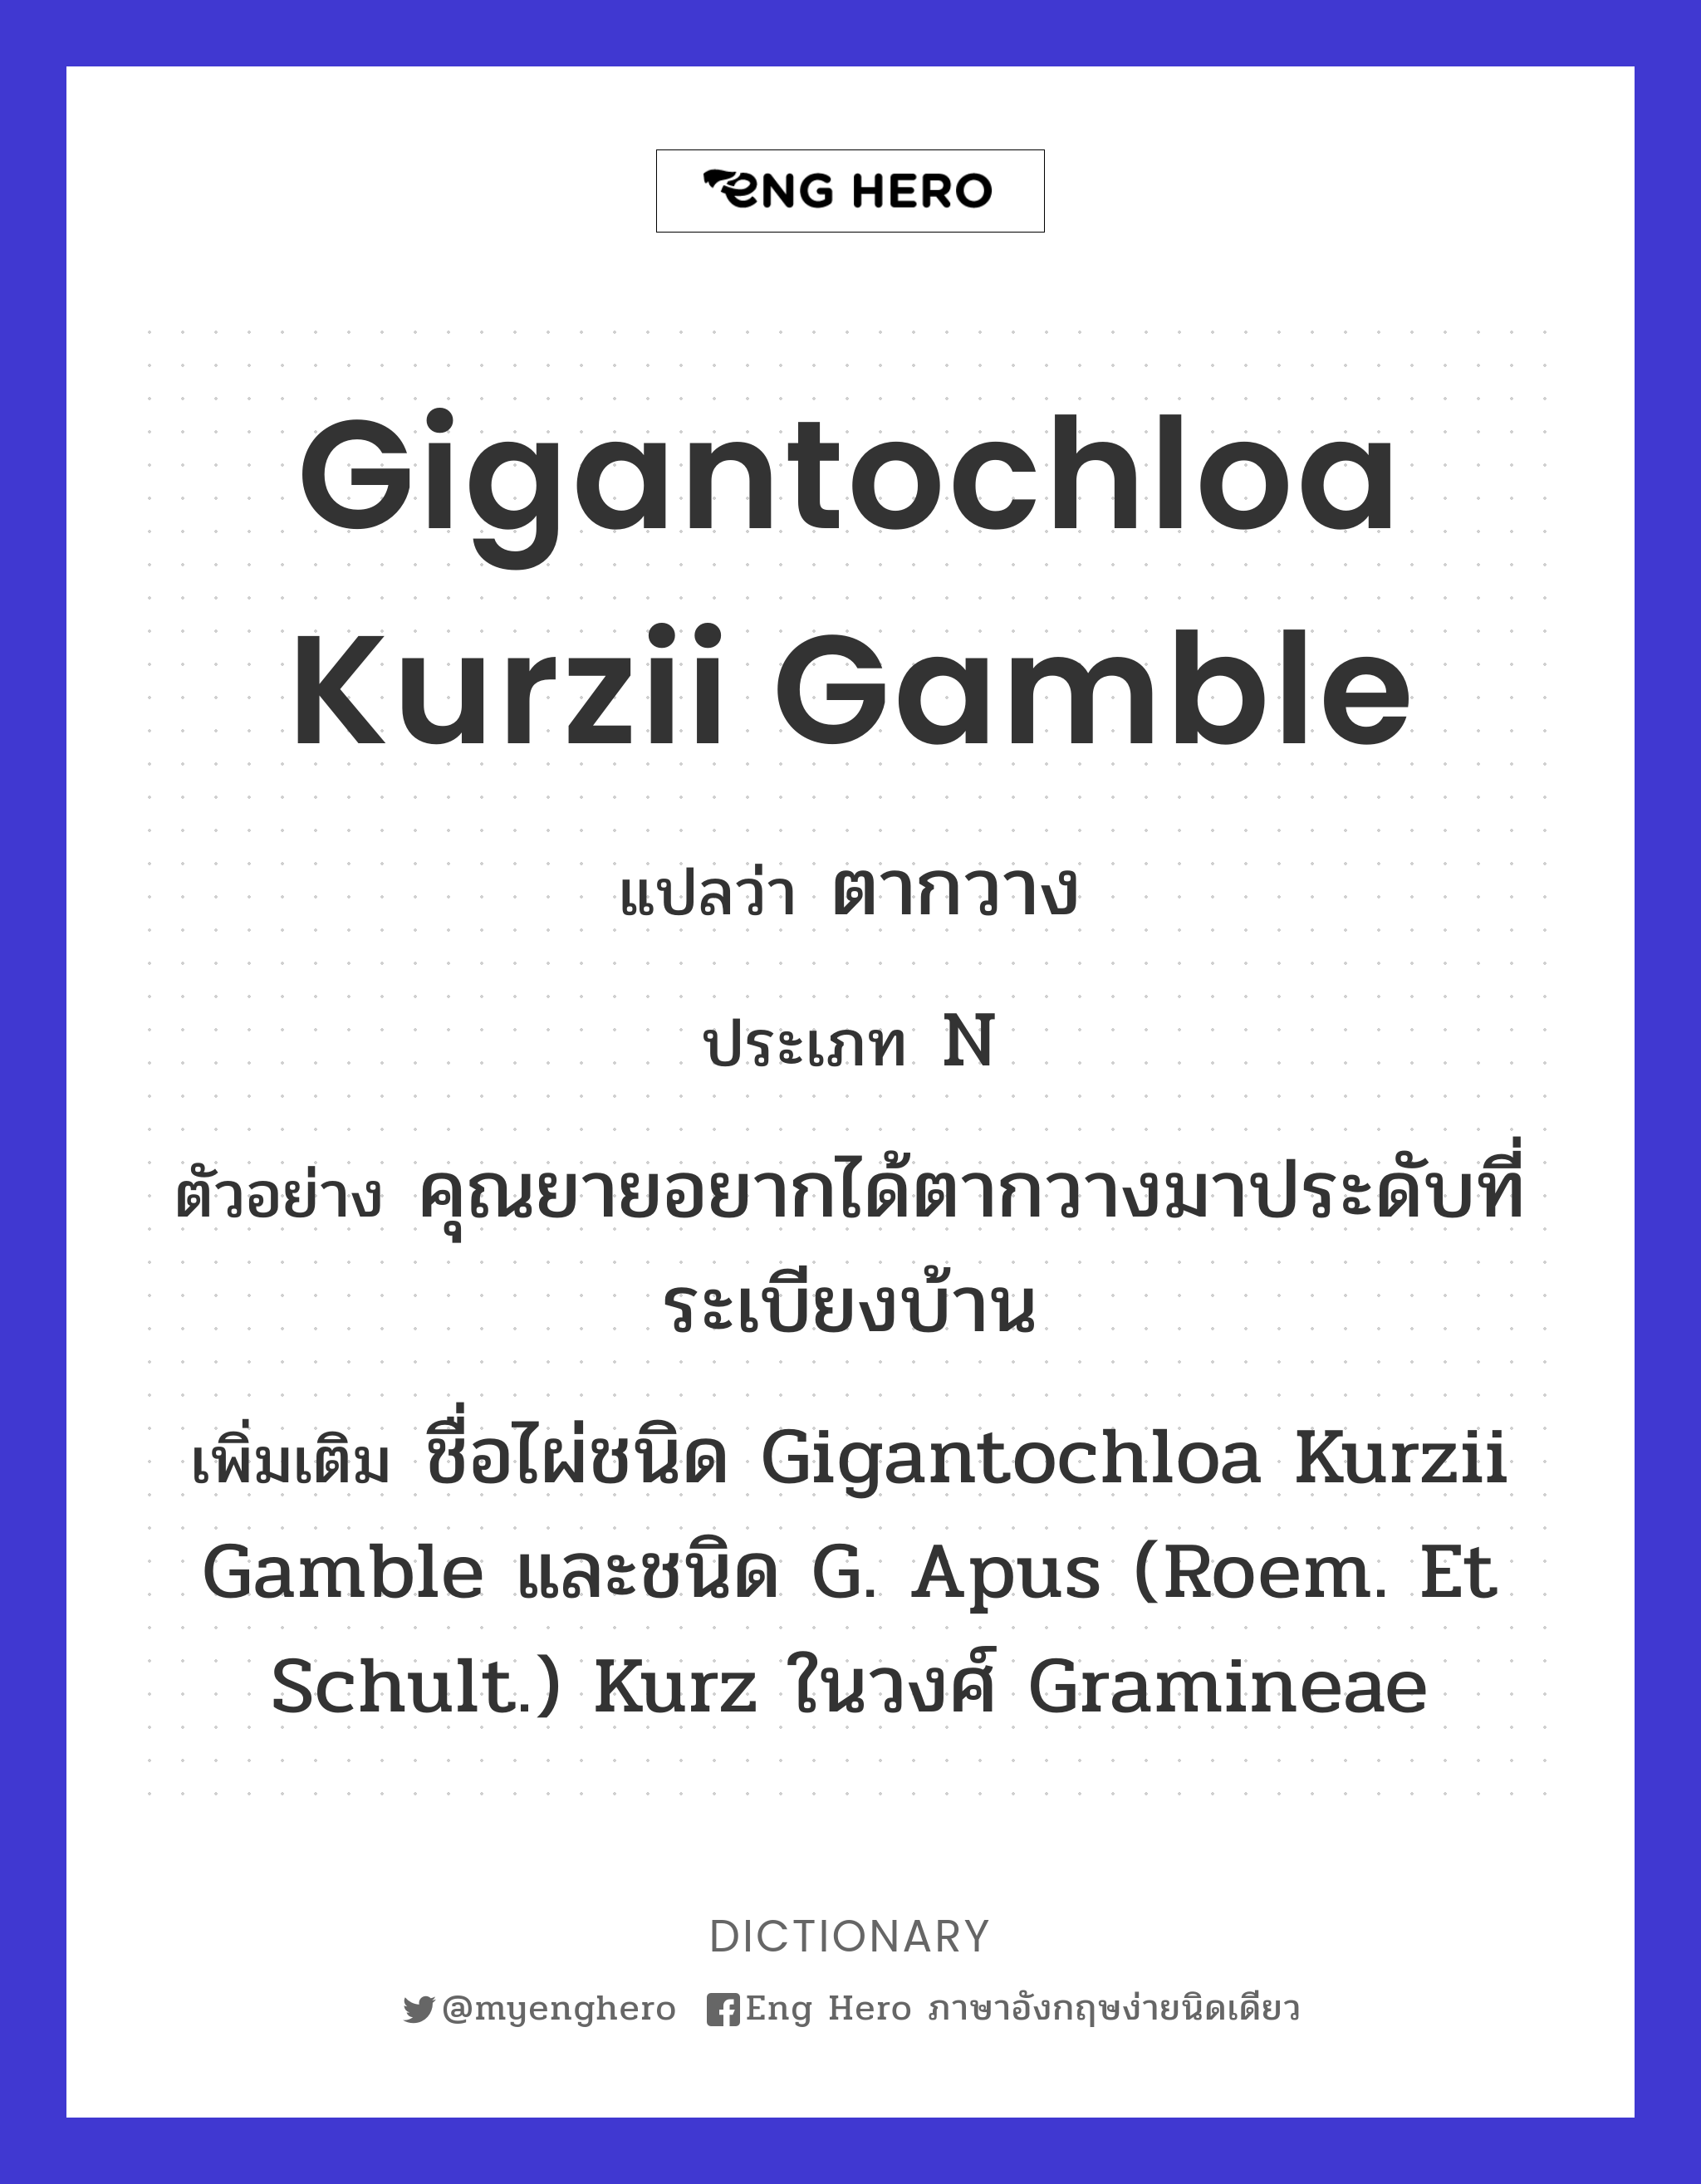 Gigantochloa kurzii Gamble